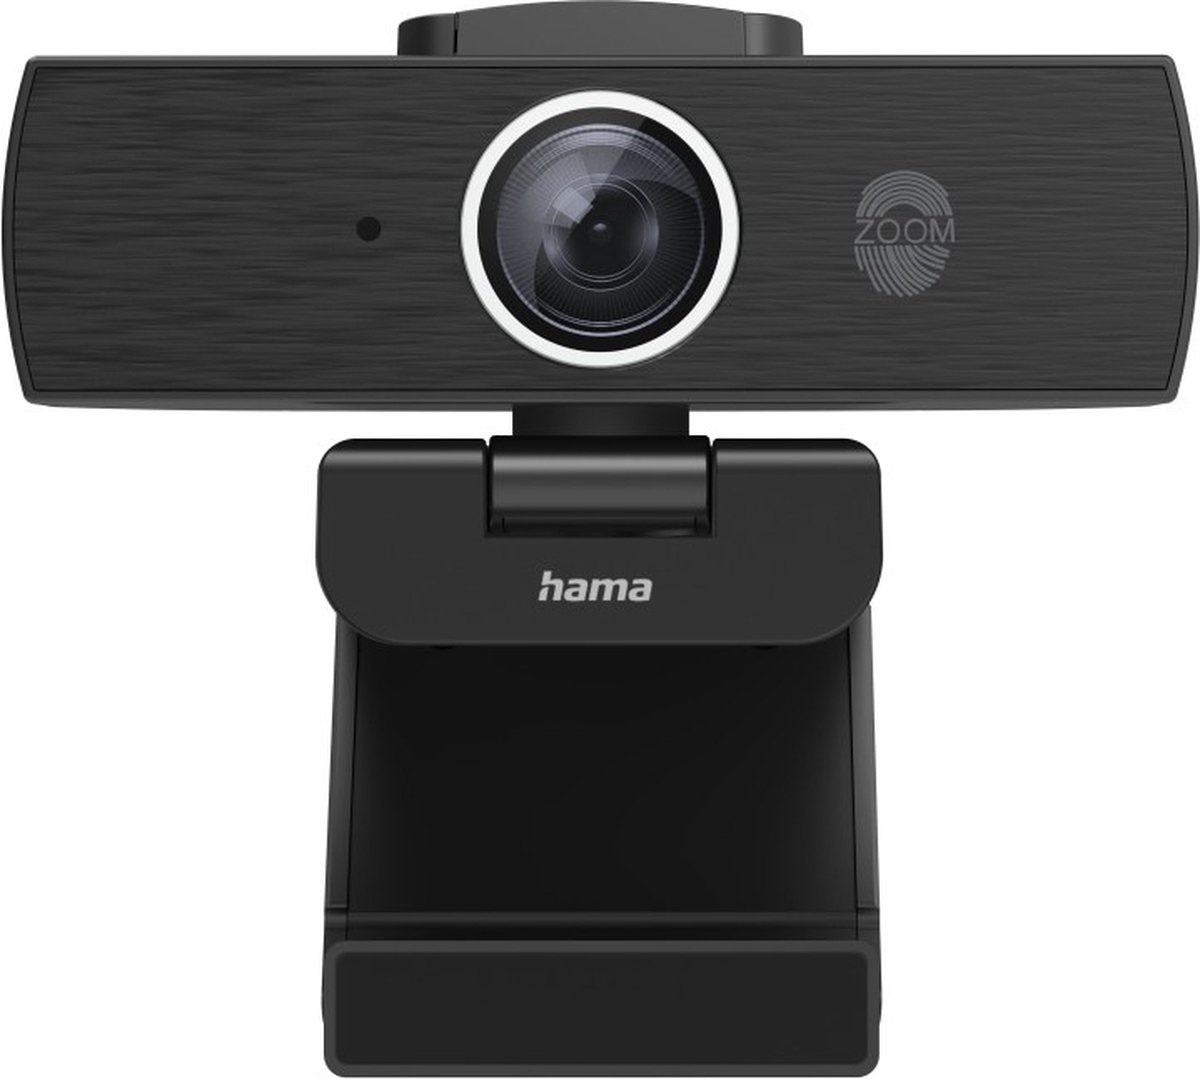 Hama C-900 Pro PC Webcam - Zwart